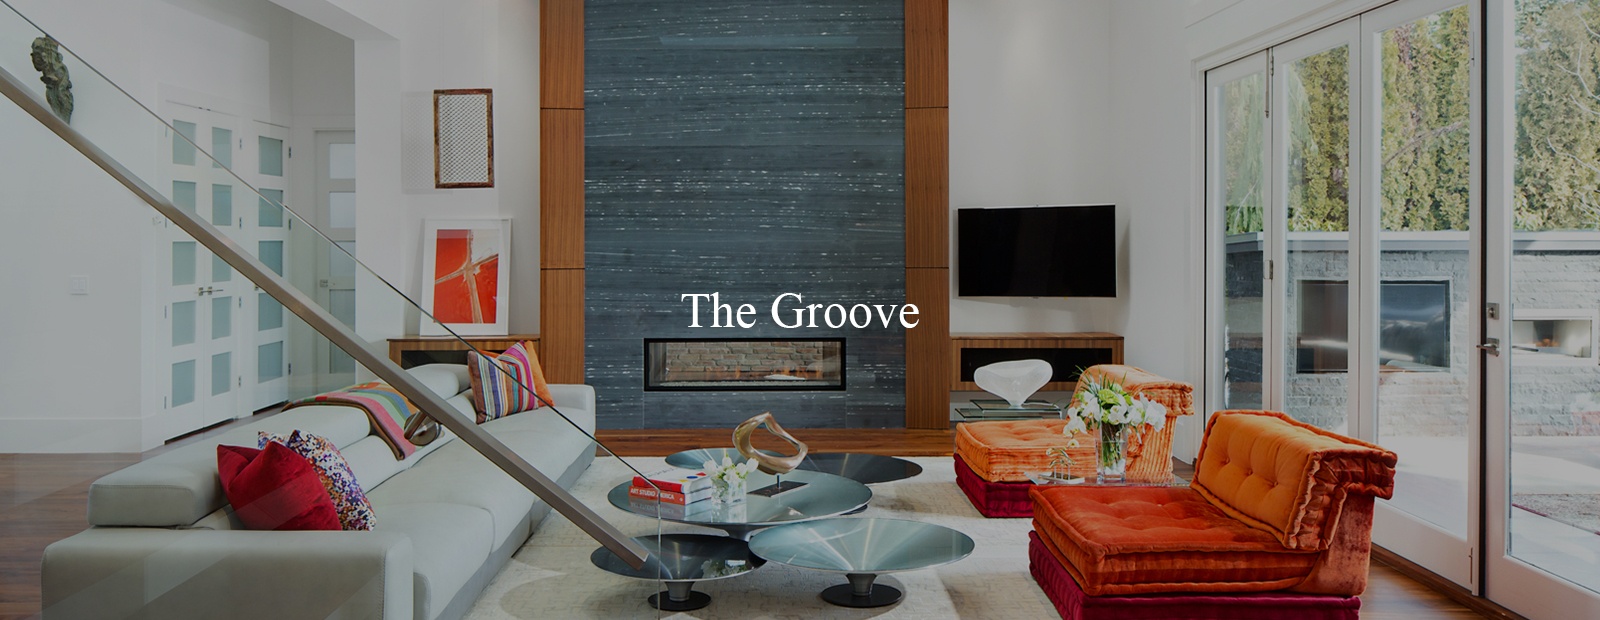 The Groove - Interior Design Company Vancouver